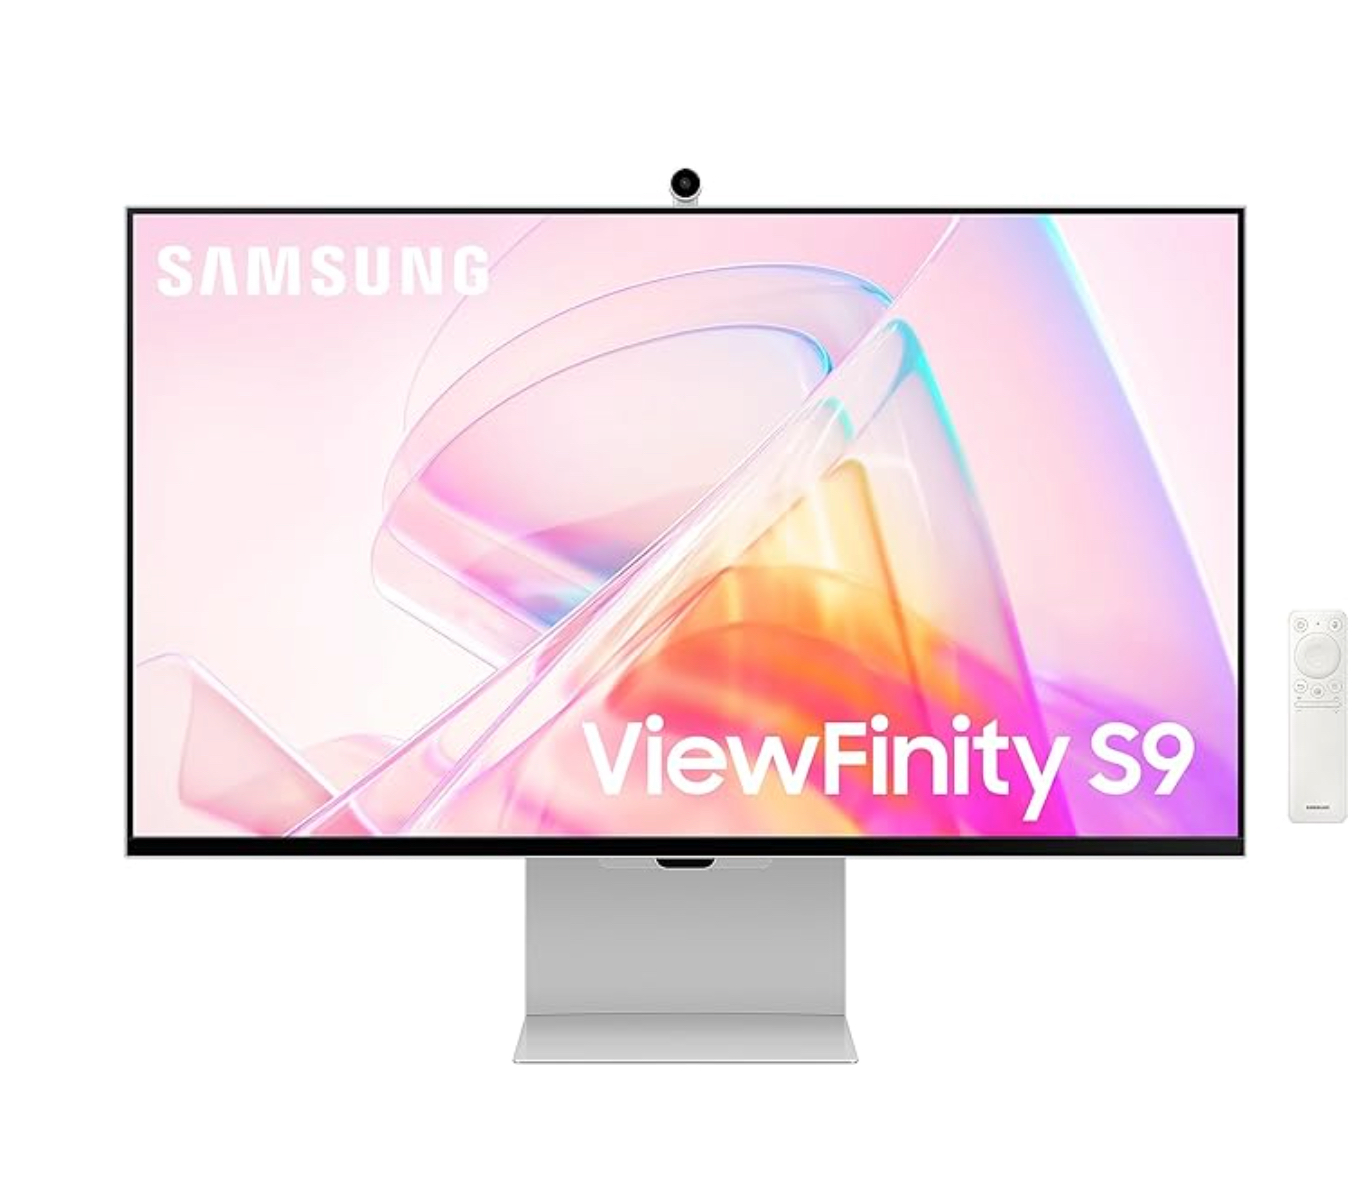 Samsung ViewFinity S9 5K monitor. 